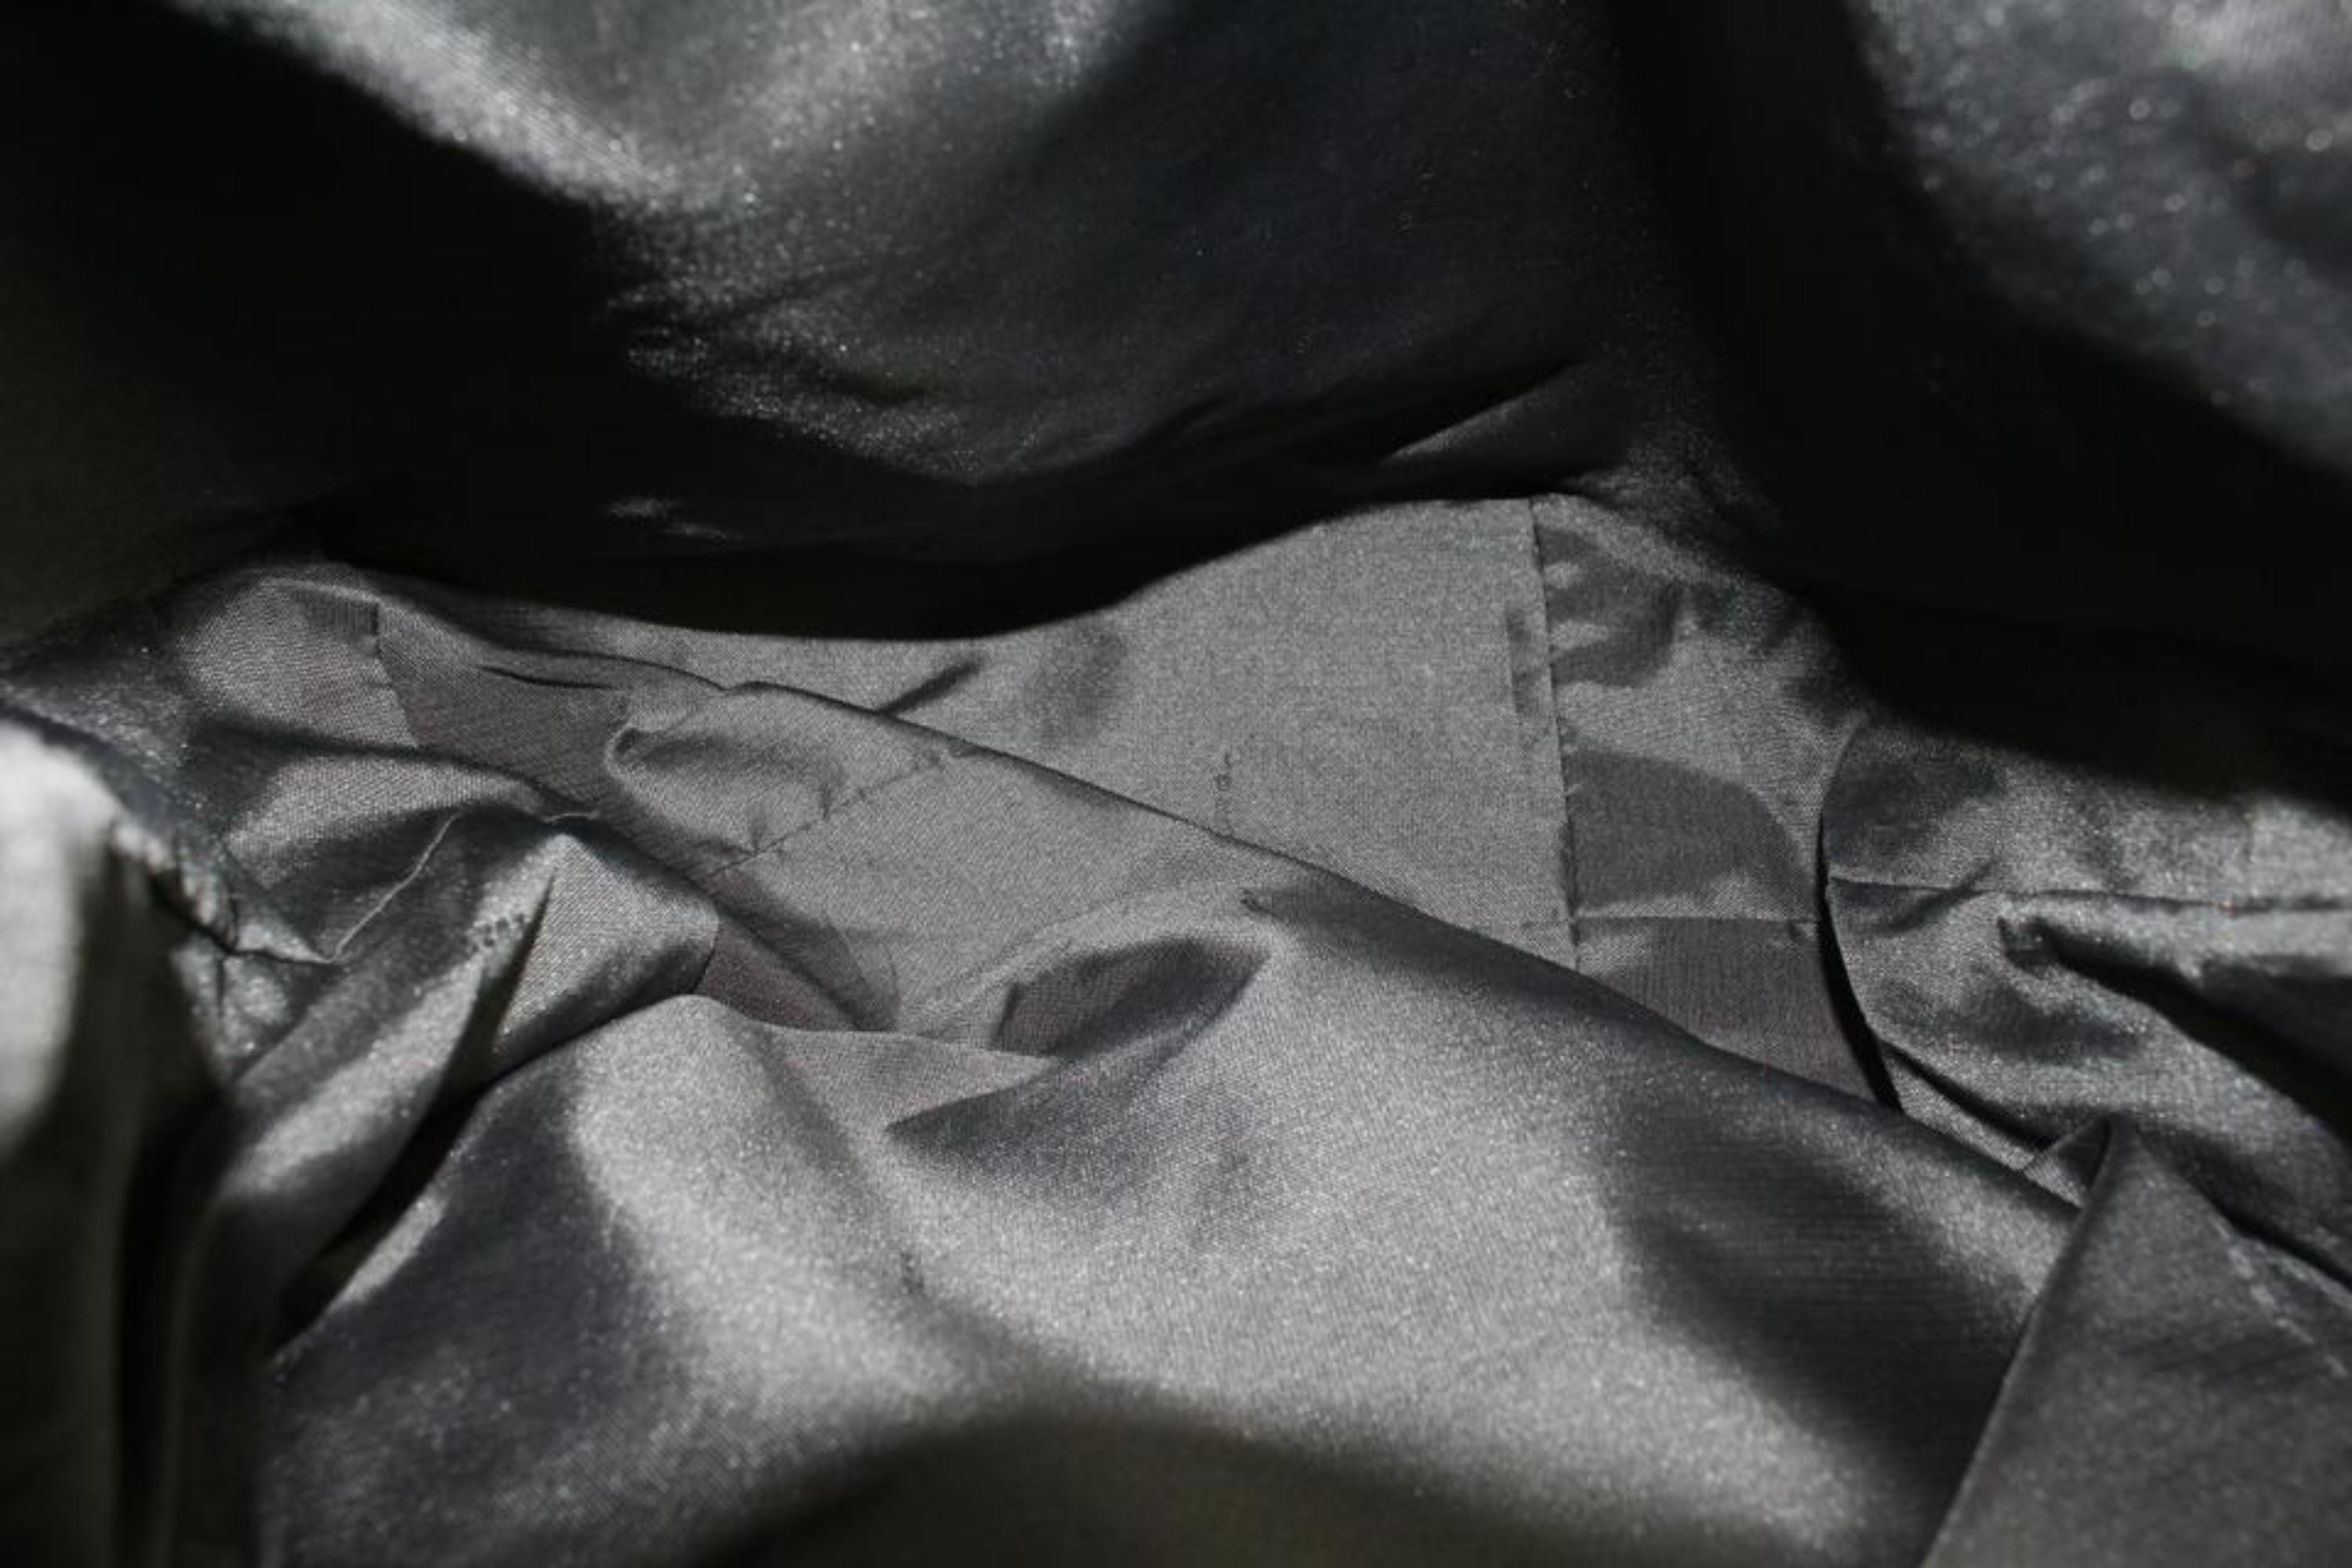 Fendi Black Silver Plaque Messenger Bag 1013f24 For Sale 5